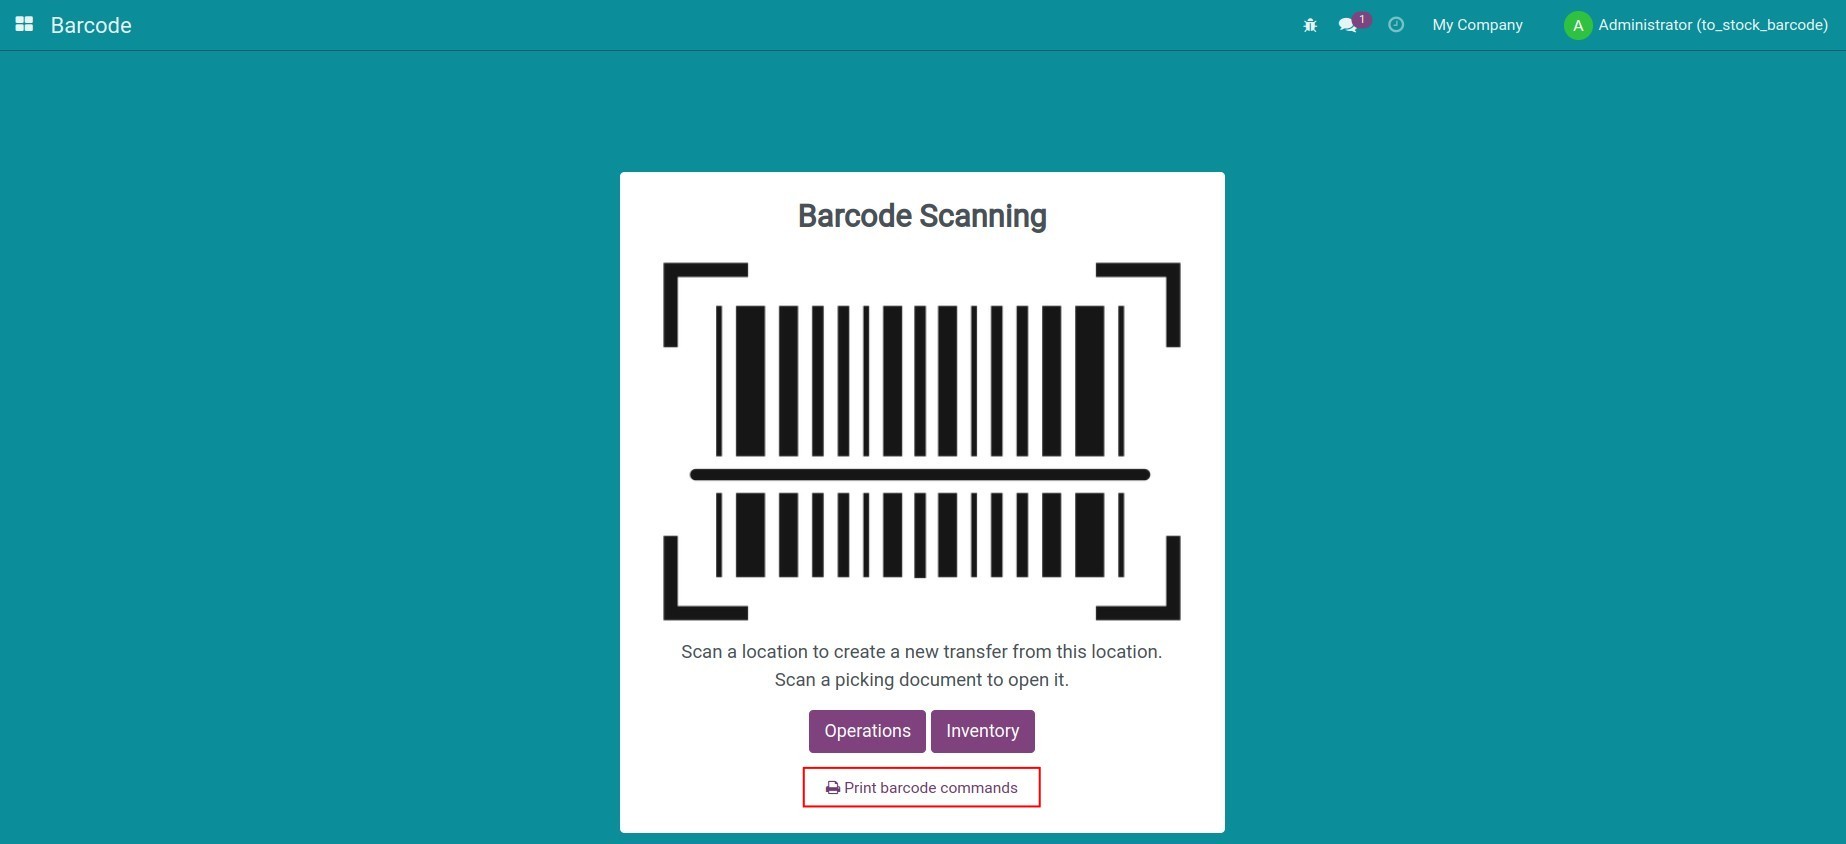 Print barcode commands